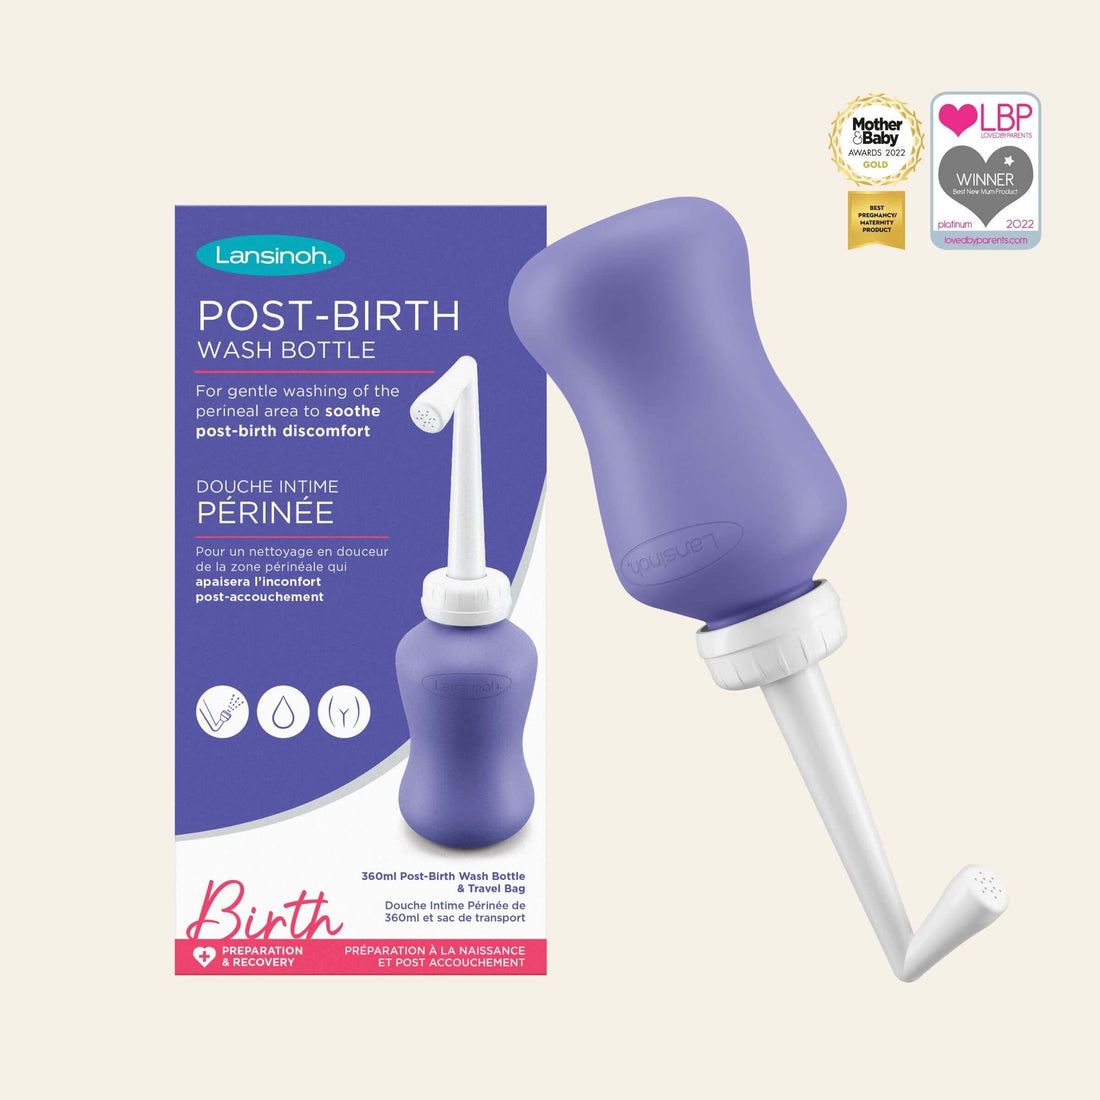 Postpartum Recovery Essentials  New Mom Postpartum Kit – Lansinoh